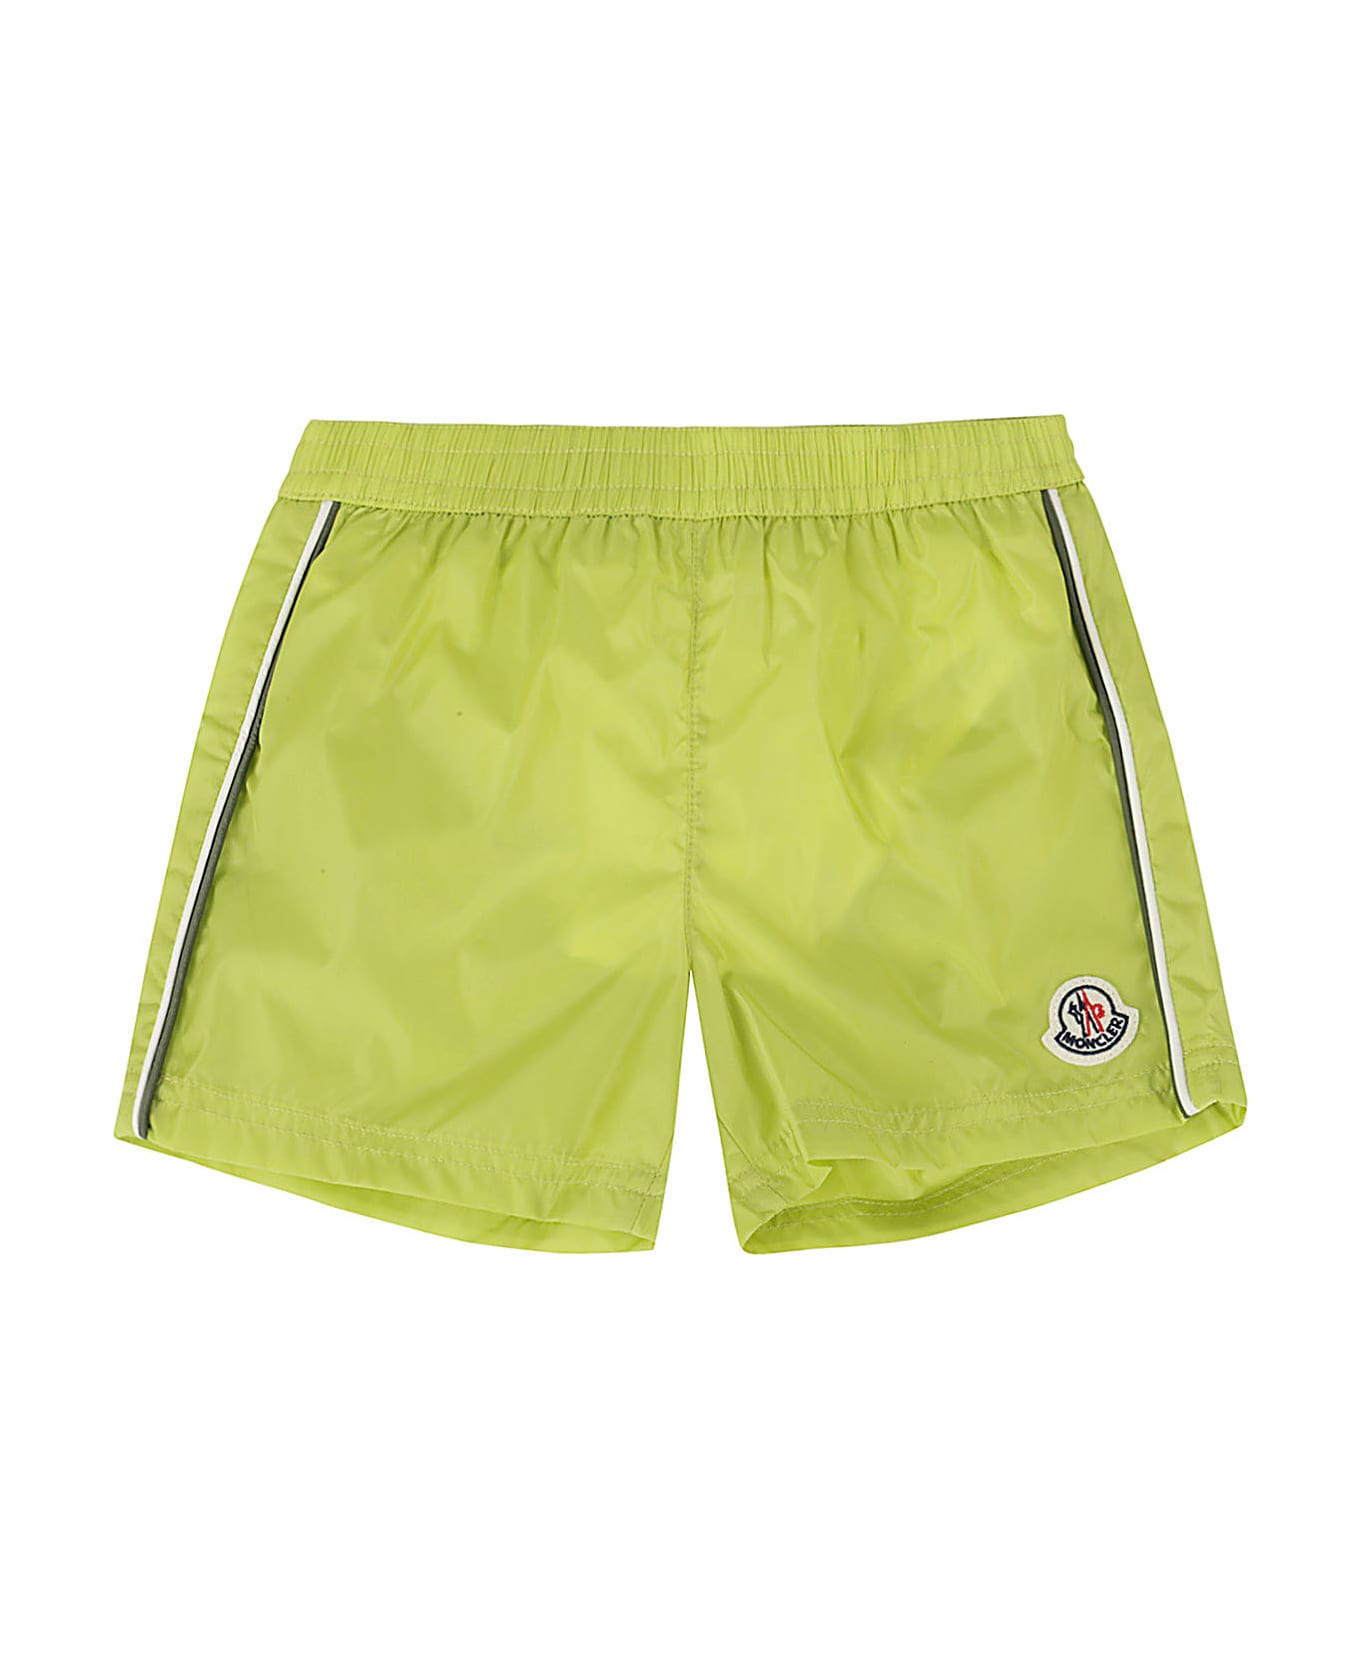 Moncler Shorts - G Lime